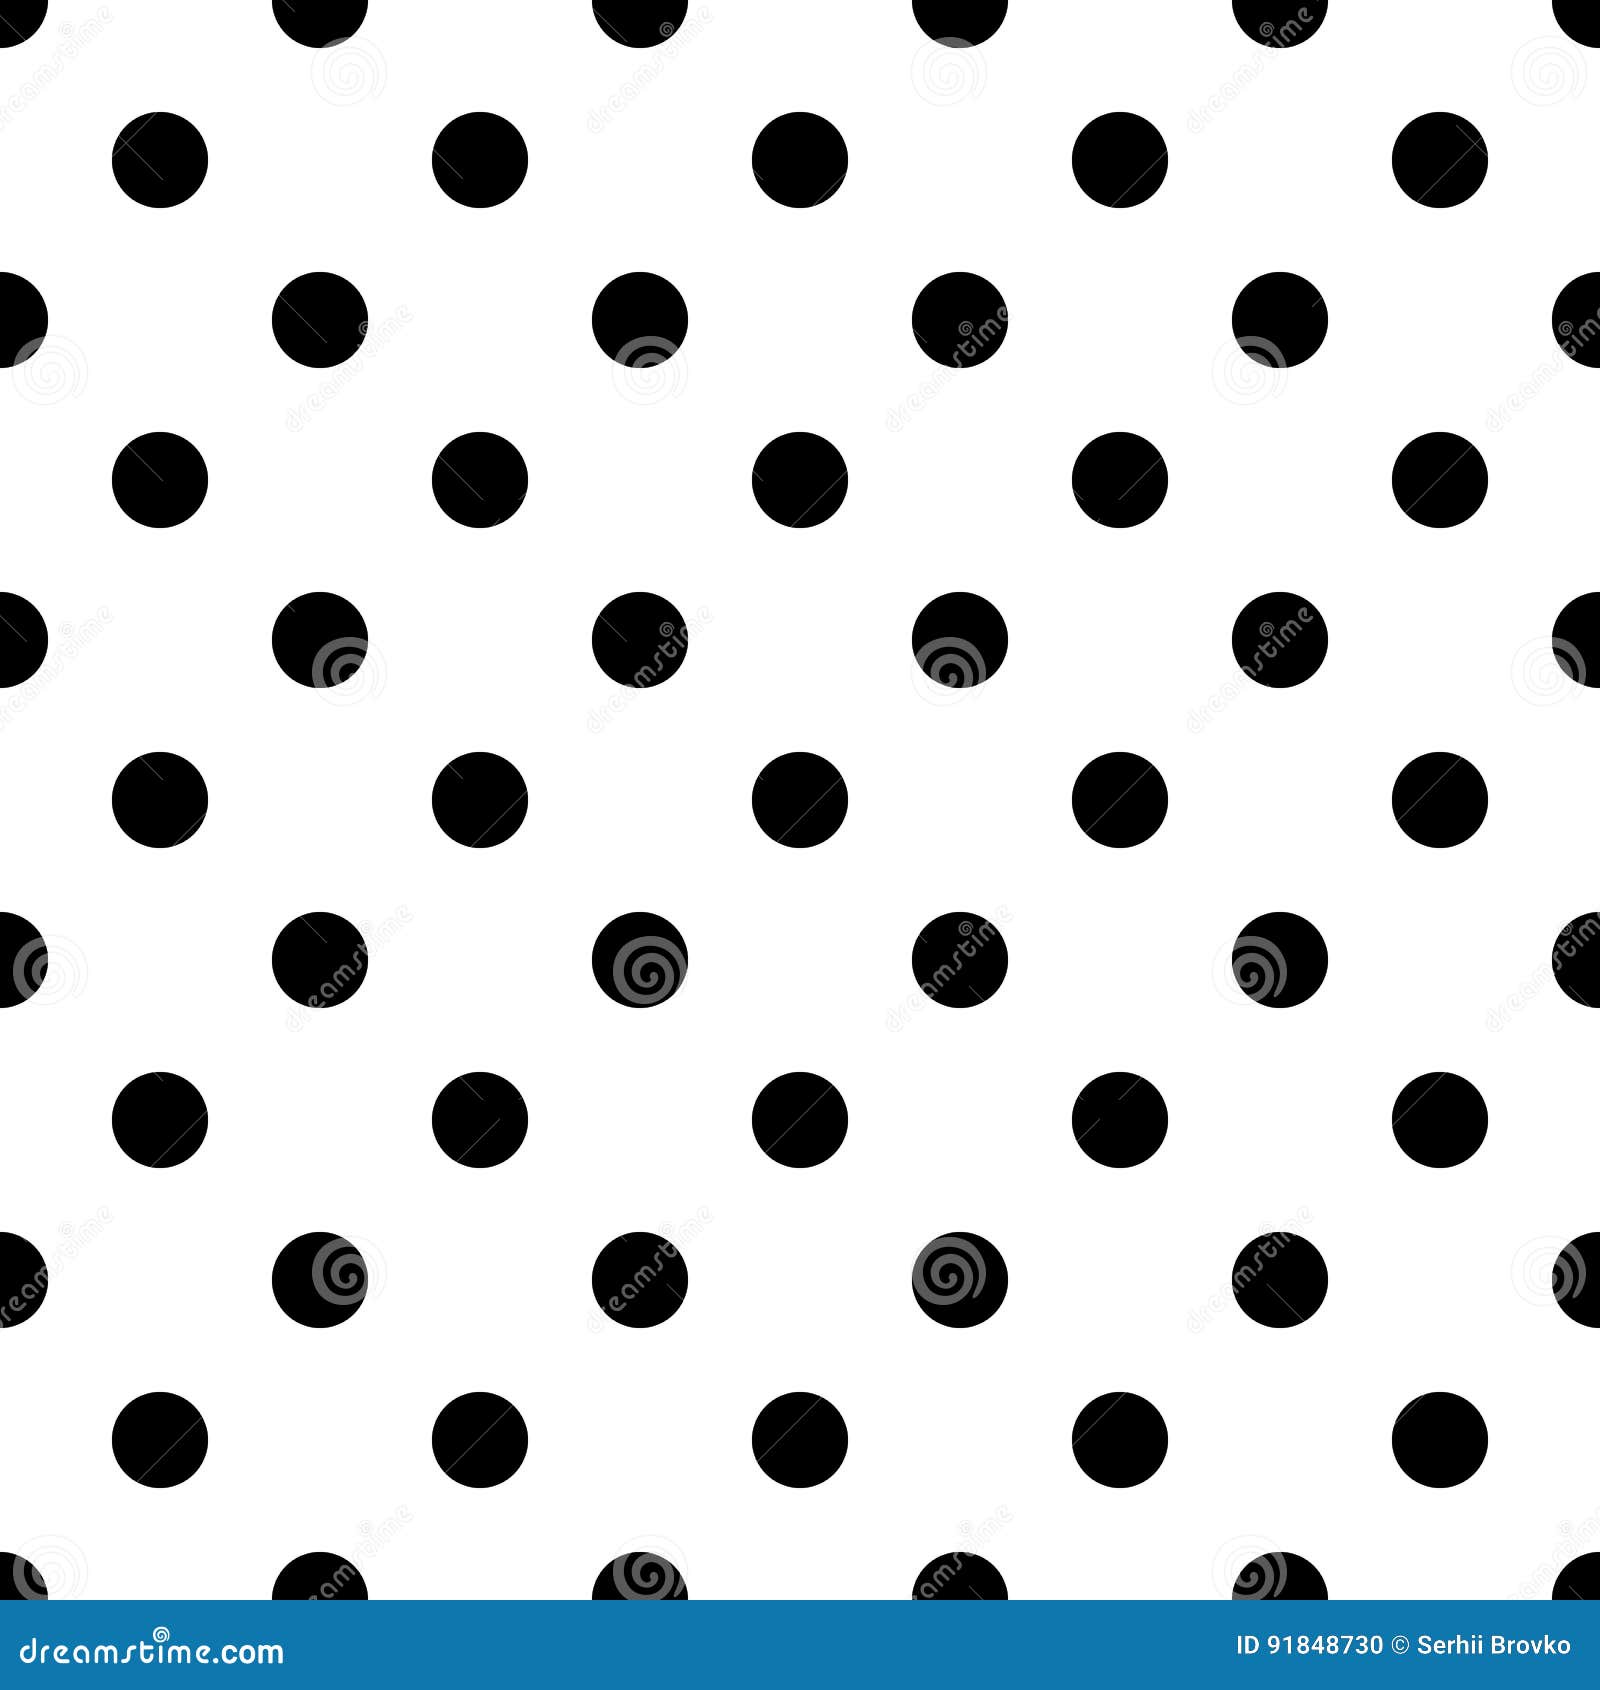 black and white seamless polka dot pattern.